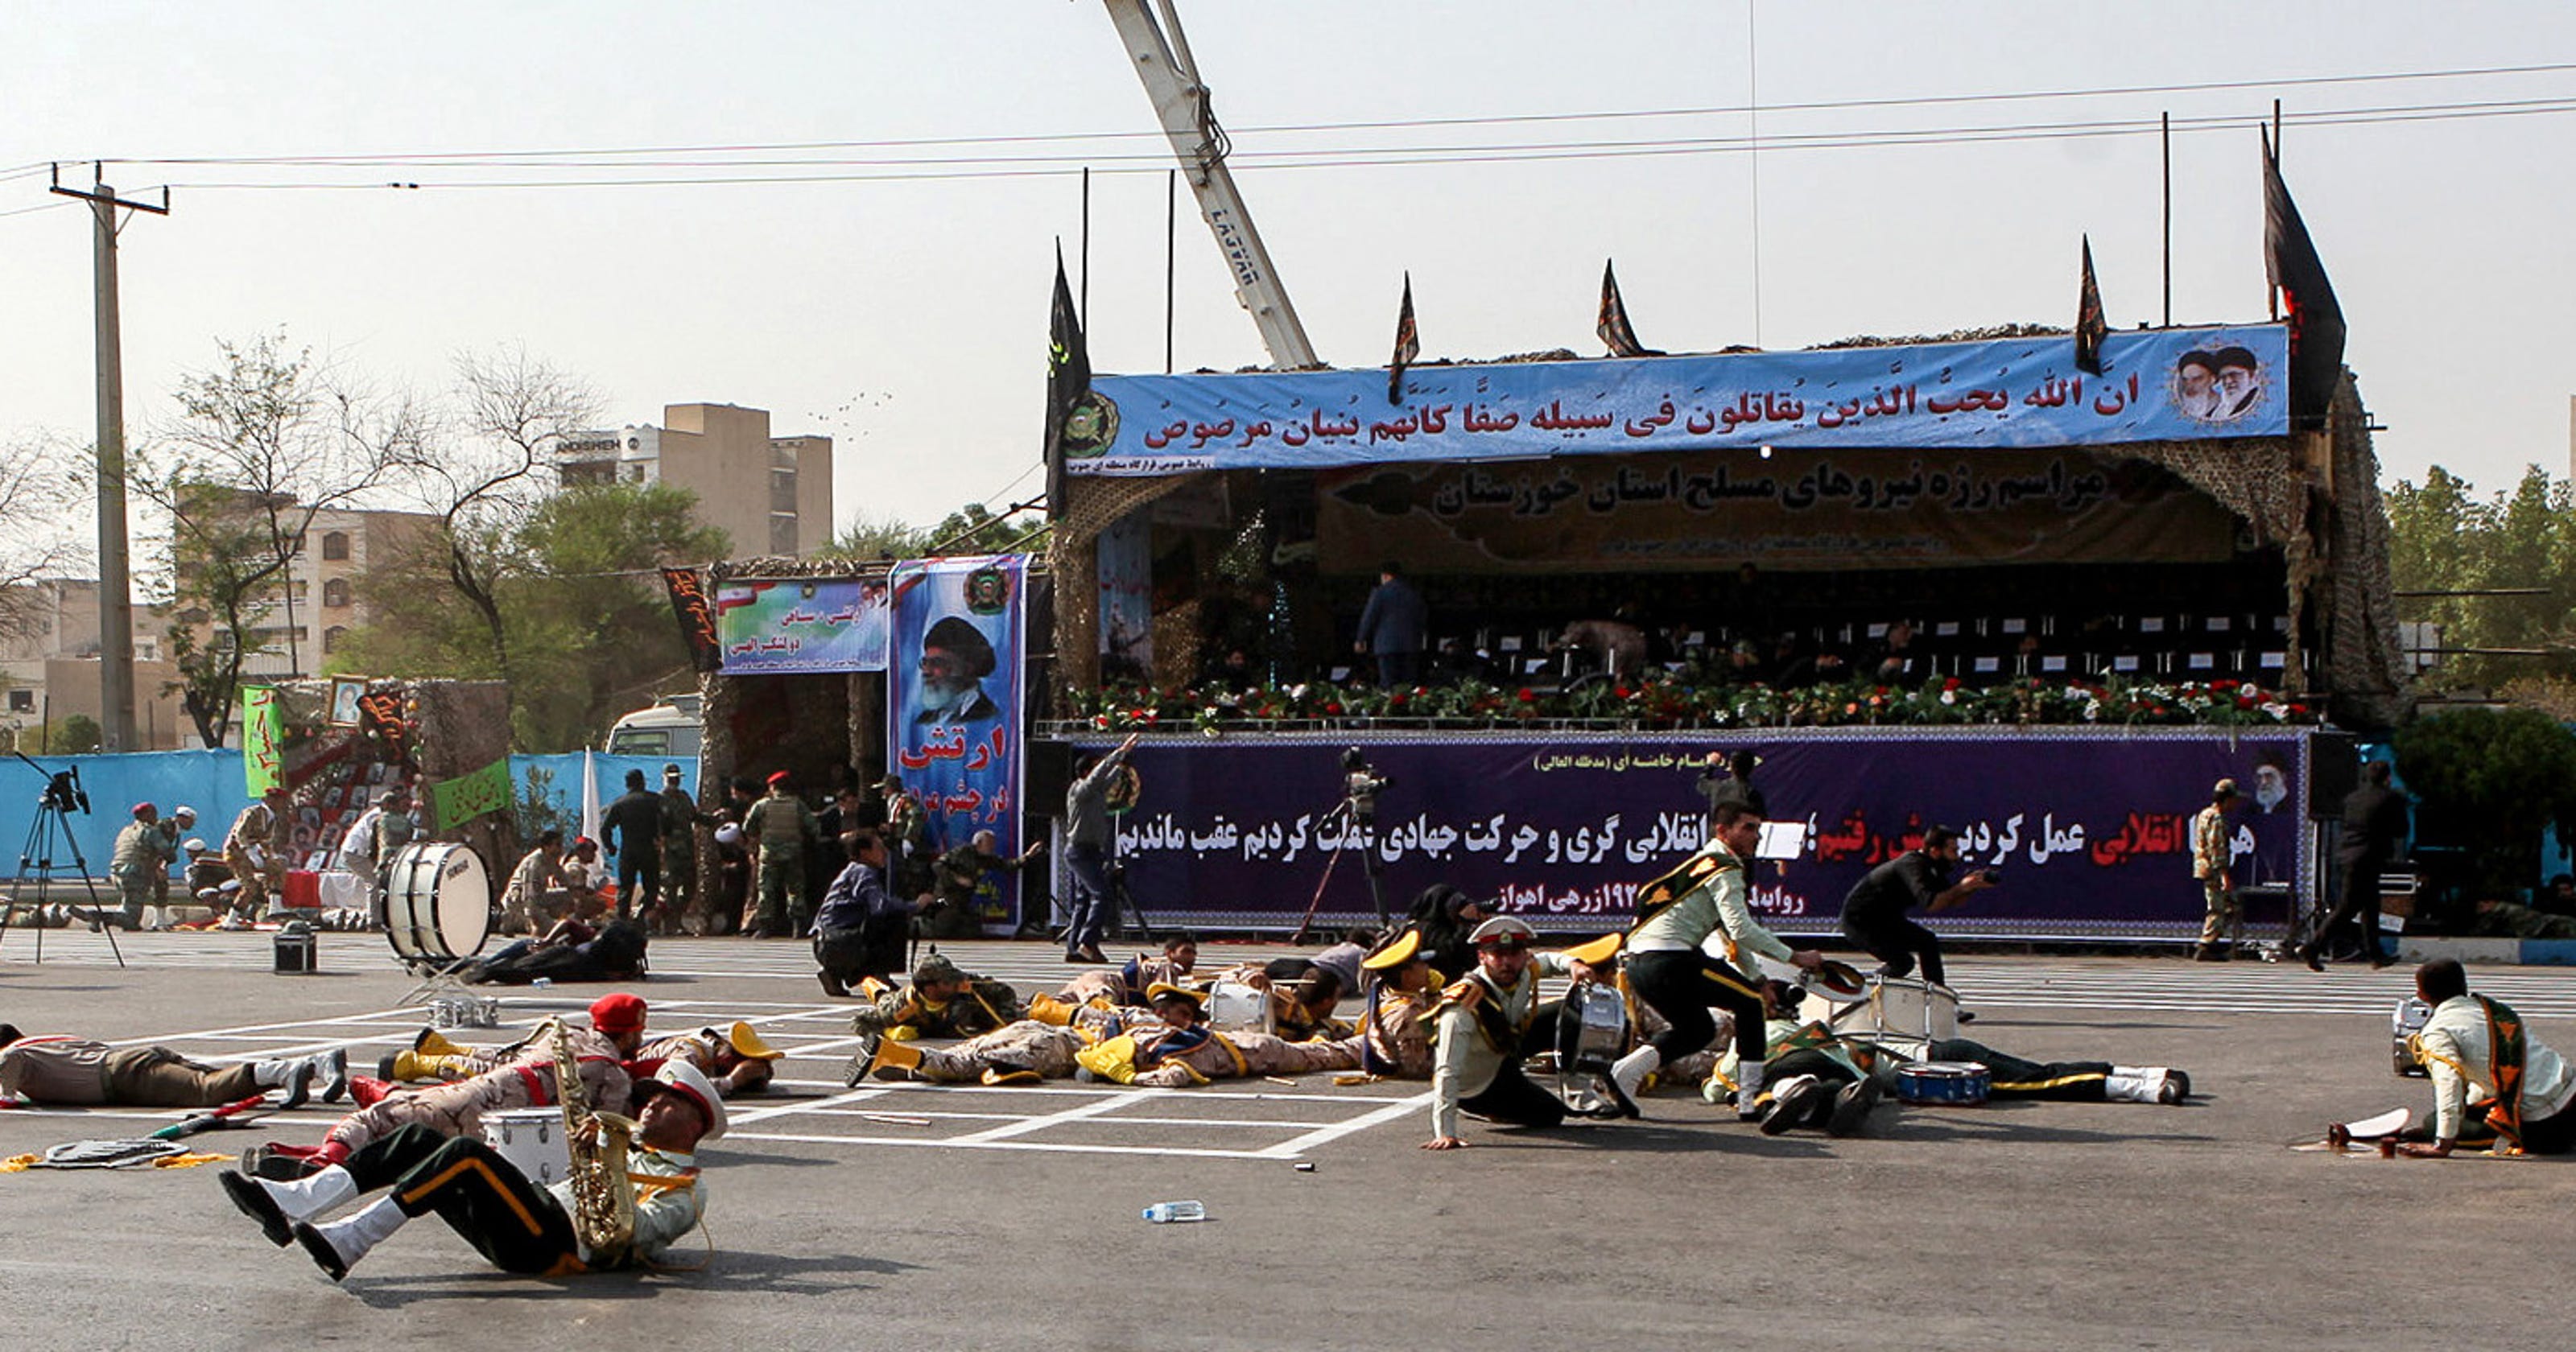 Iran Parade At Least 25 Dead As Gunmen Spray Crowd In Southwest City